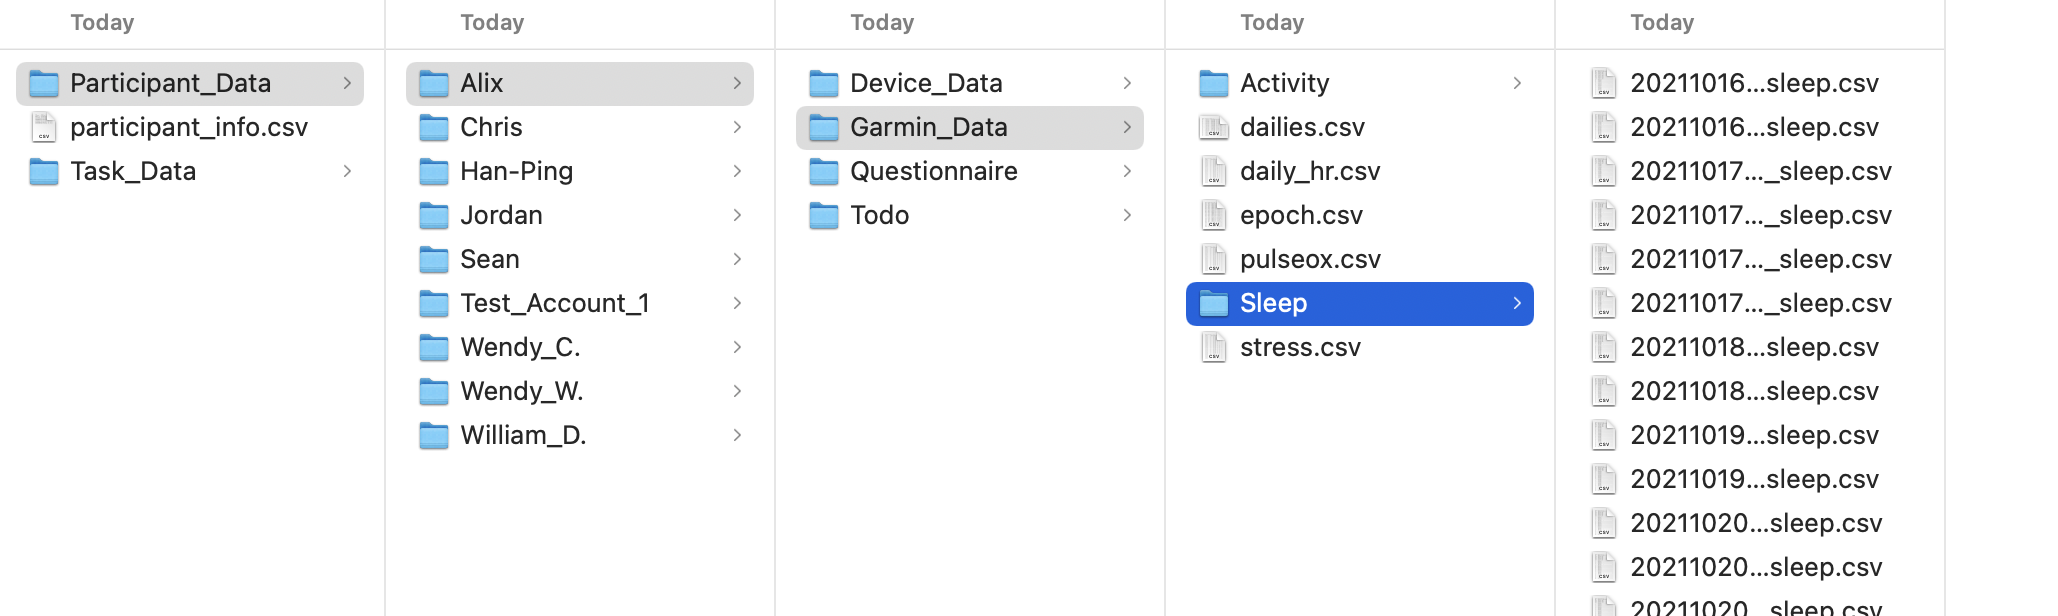 Garmin sleep data files organized into CSV